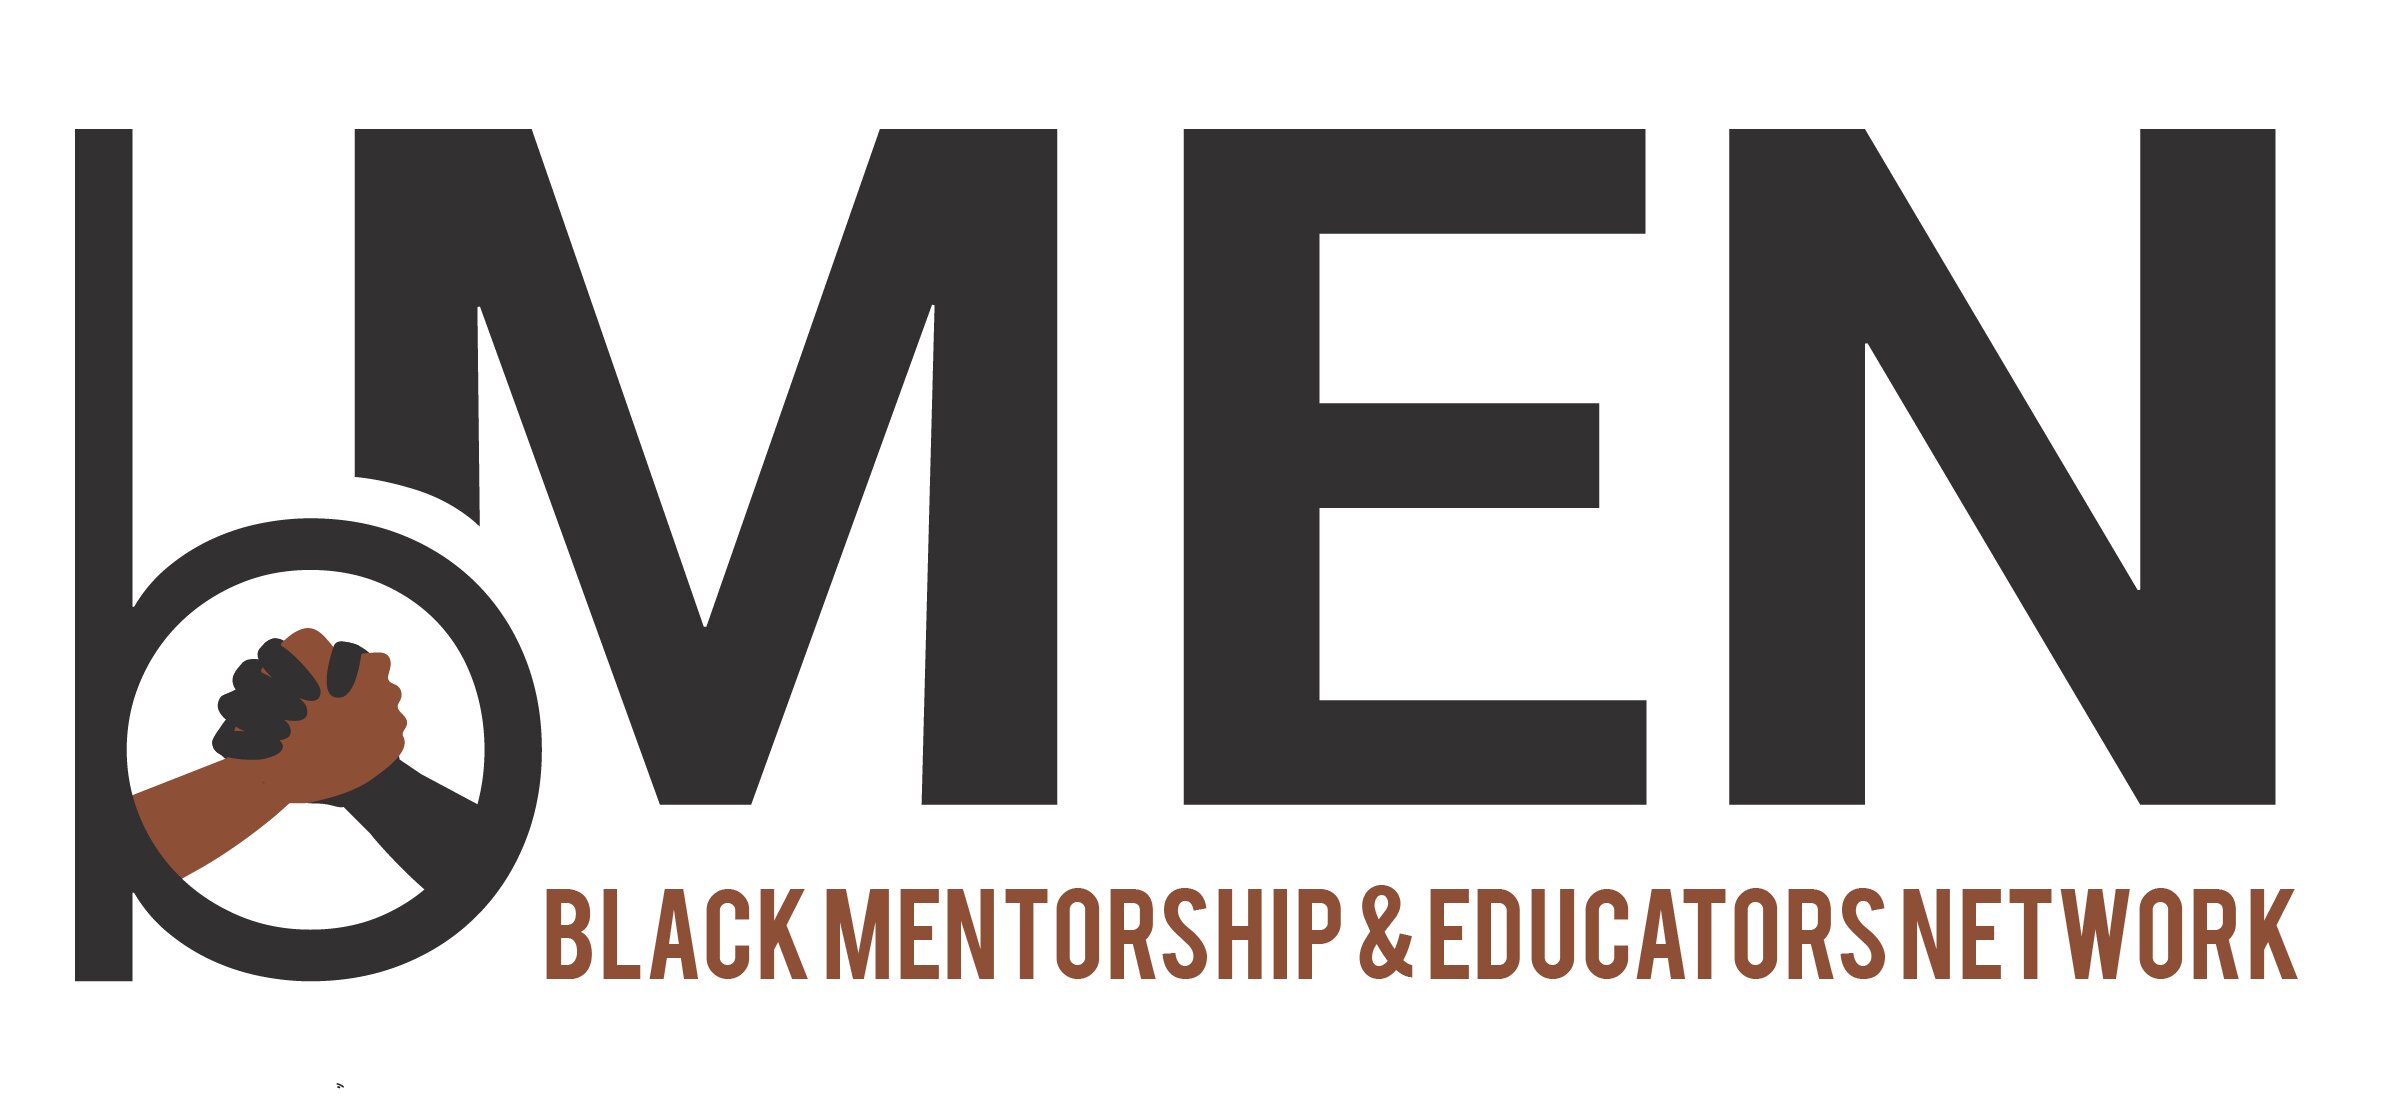 Black Mentorship & Educators Network